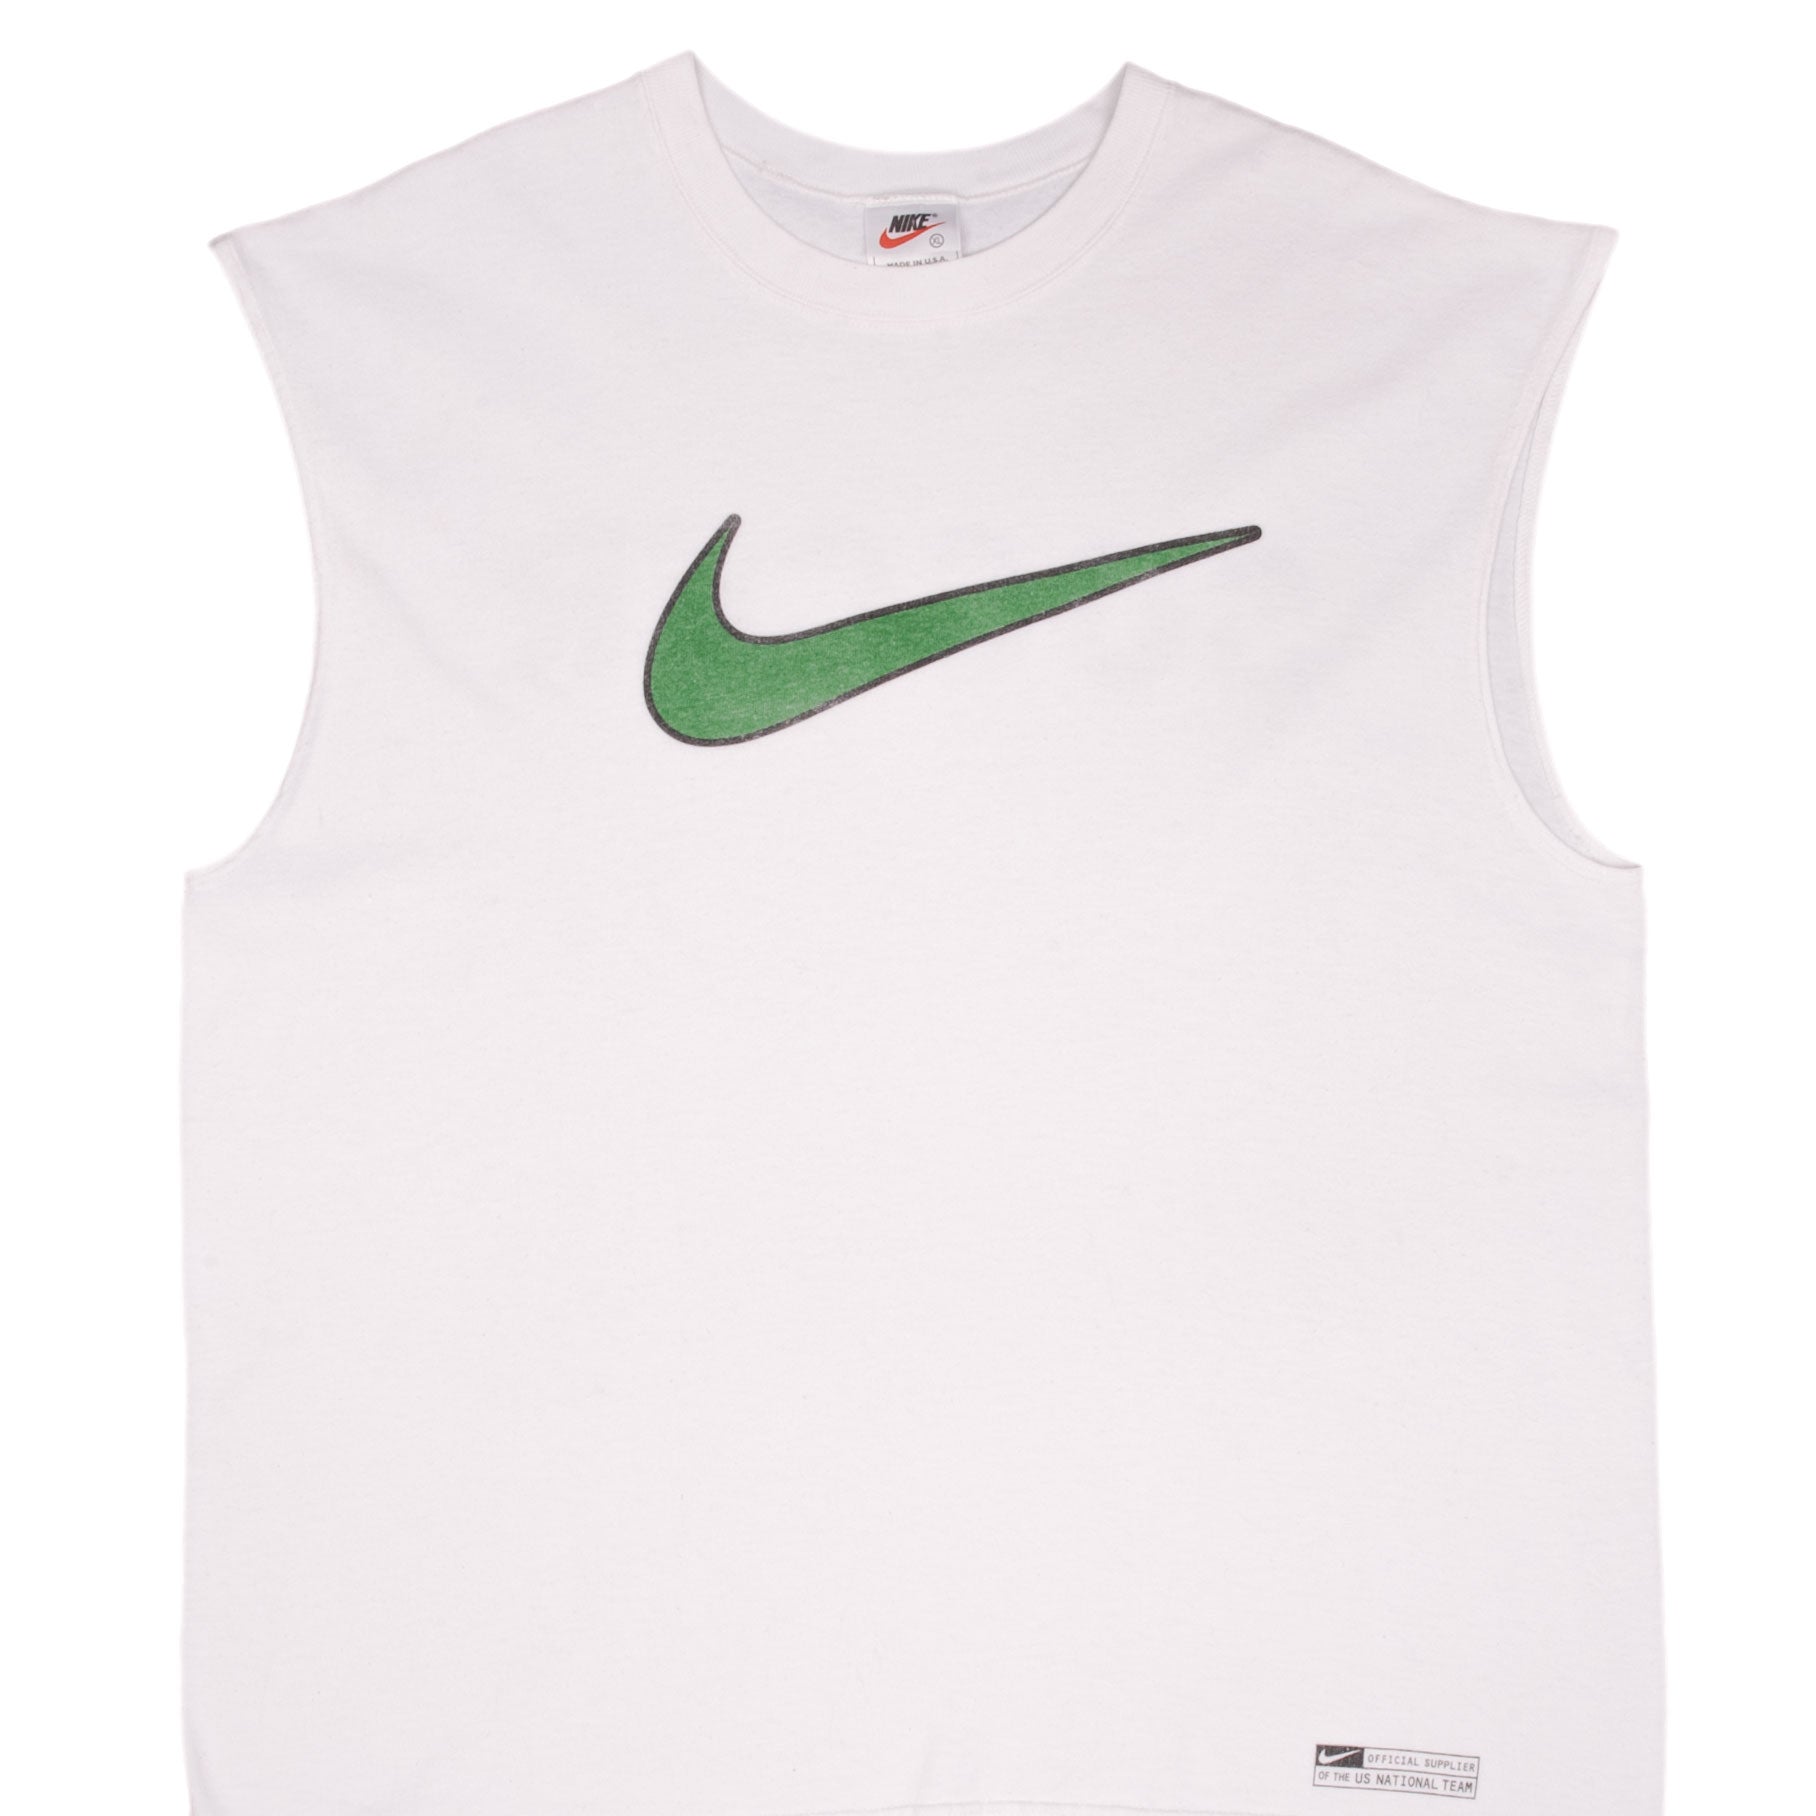 Nike Shirt 80s Tank Top Sheer White Mesh Athletic Shirt Sports Tee Sporty  Running Singlet Retro Vintage 90s Retro Small S -  Israel